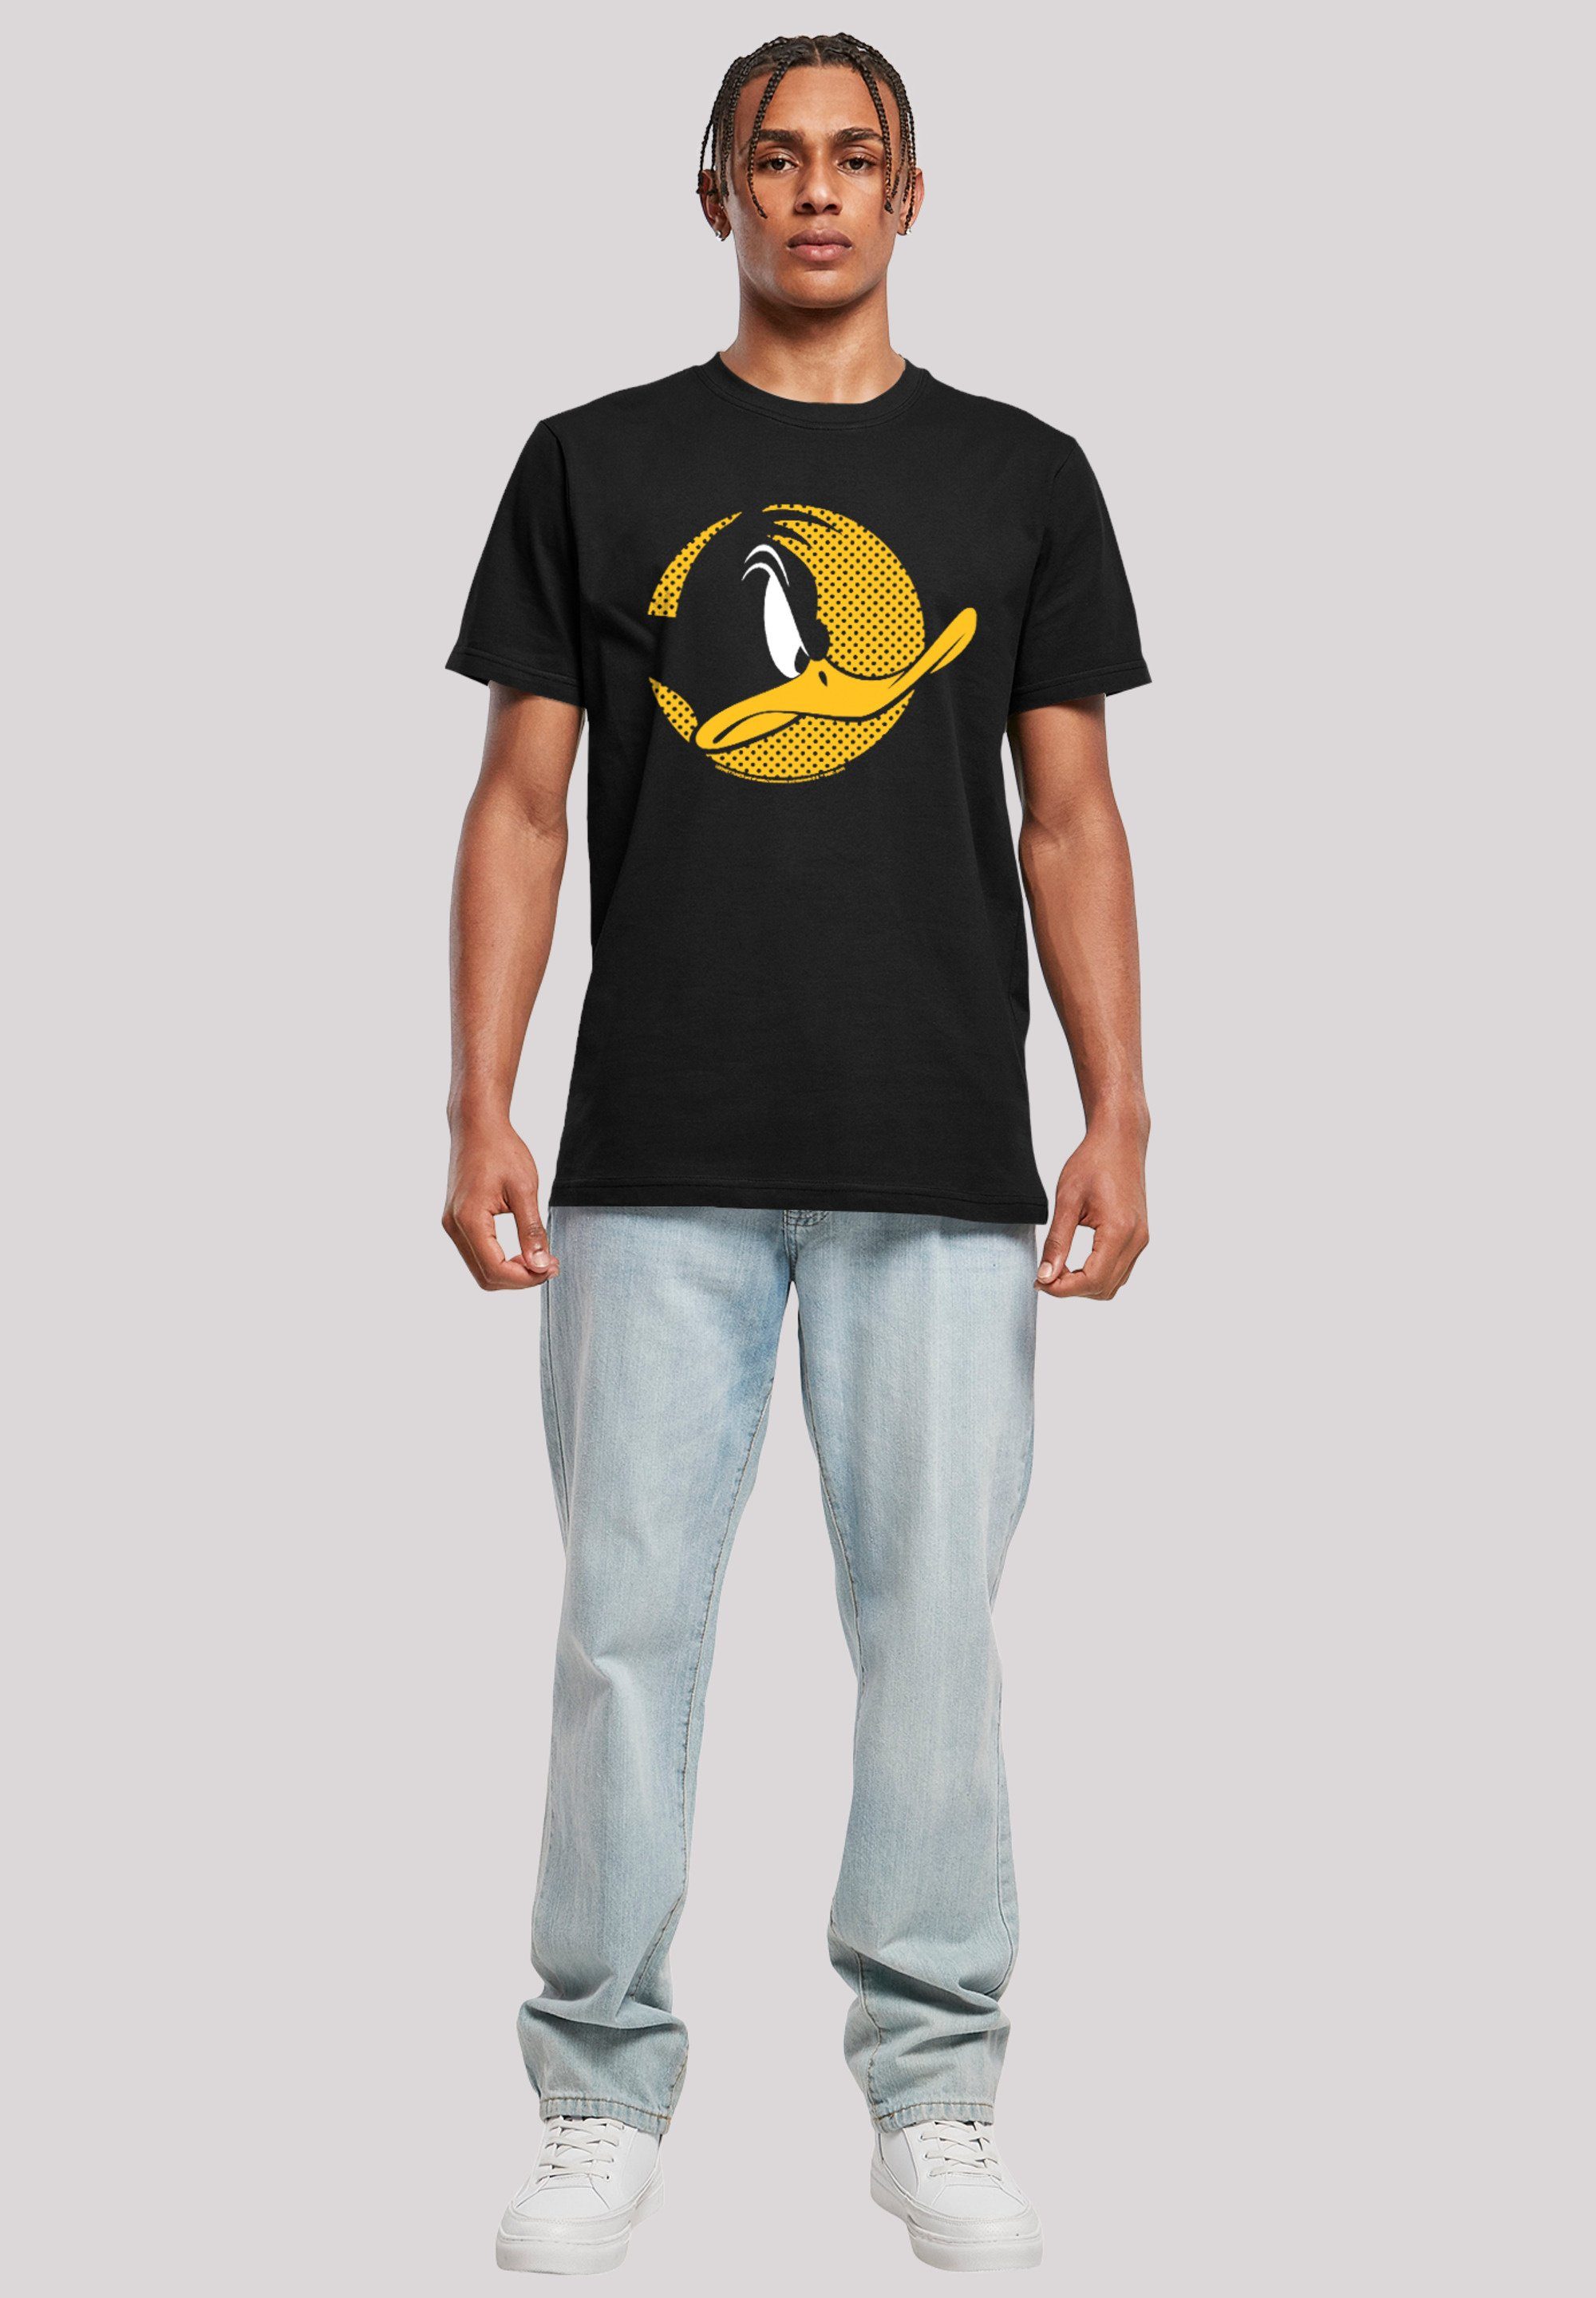 Tunes F4NT4STIC Daffy Logo Cartoon Looney Merch,Regular-Fit,Basic,Bedruckt Dotted Duck T-Shirt Herren,Premium